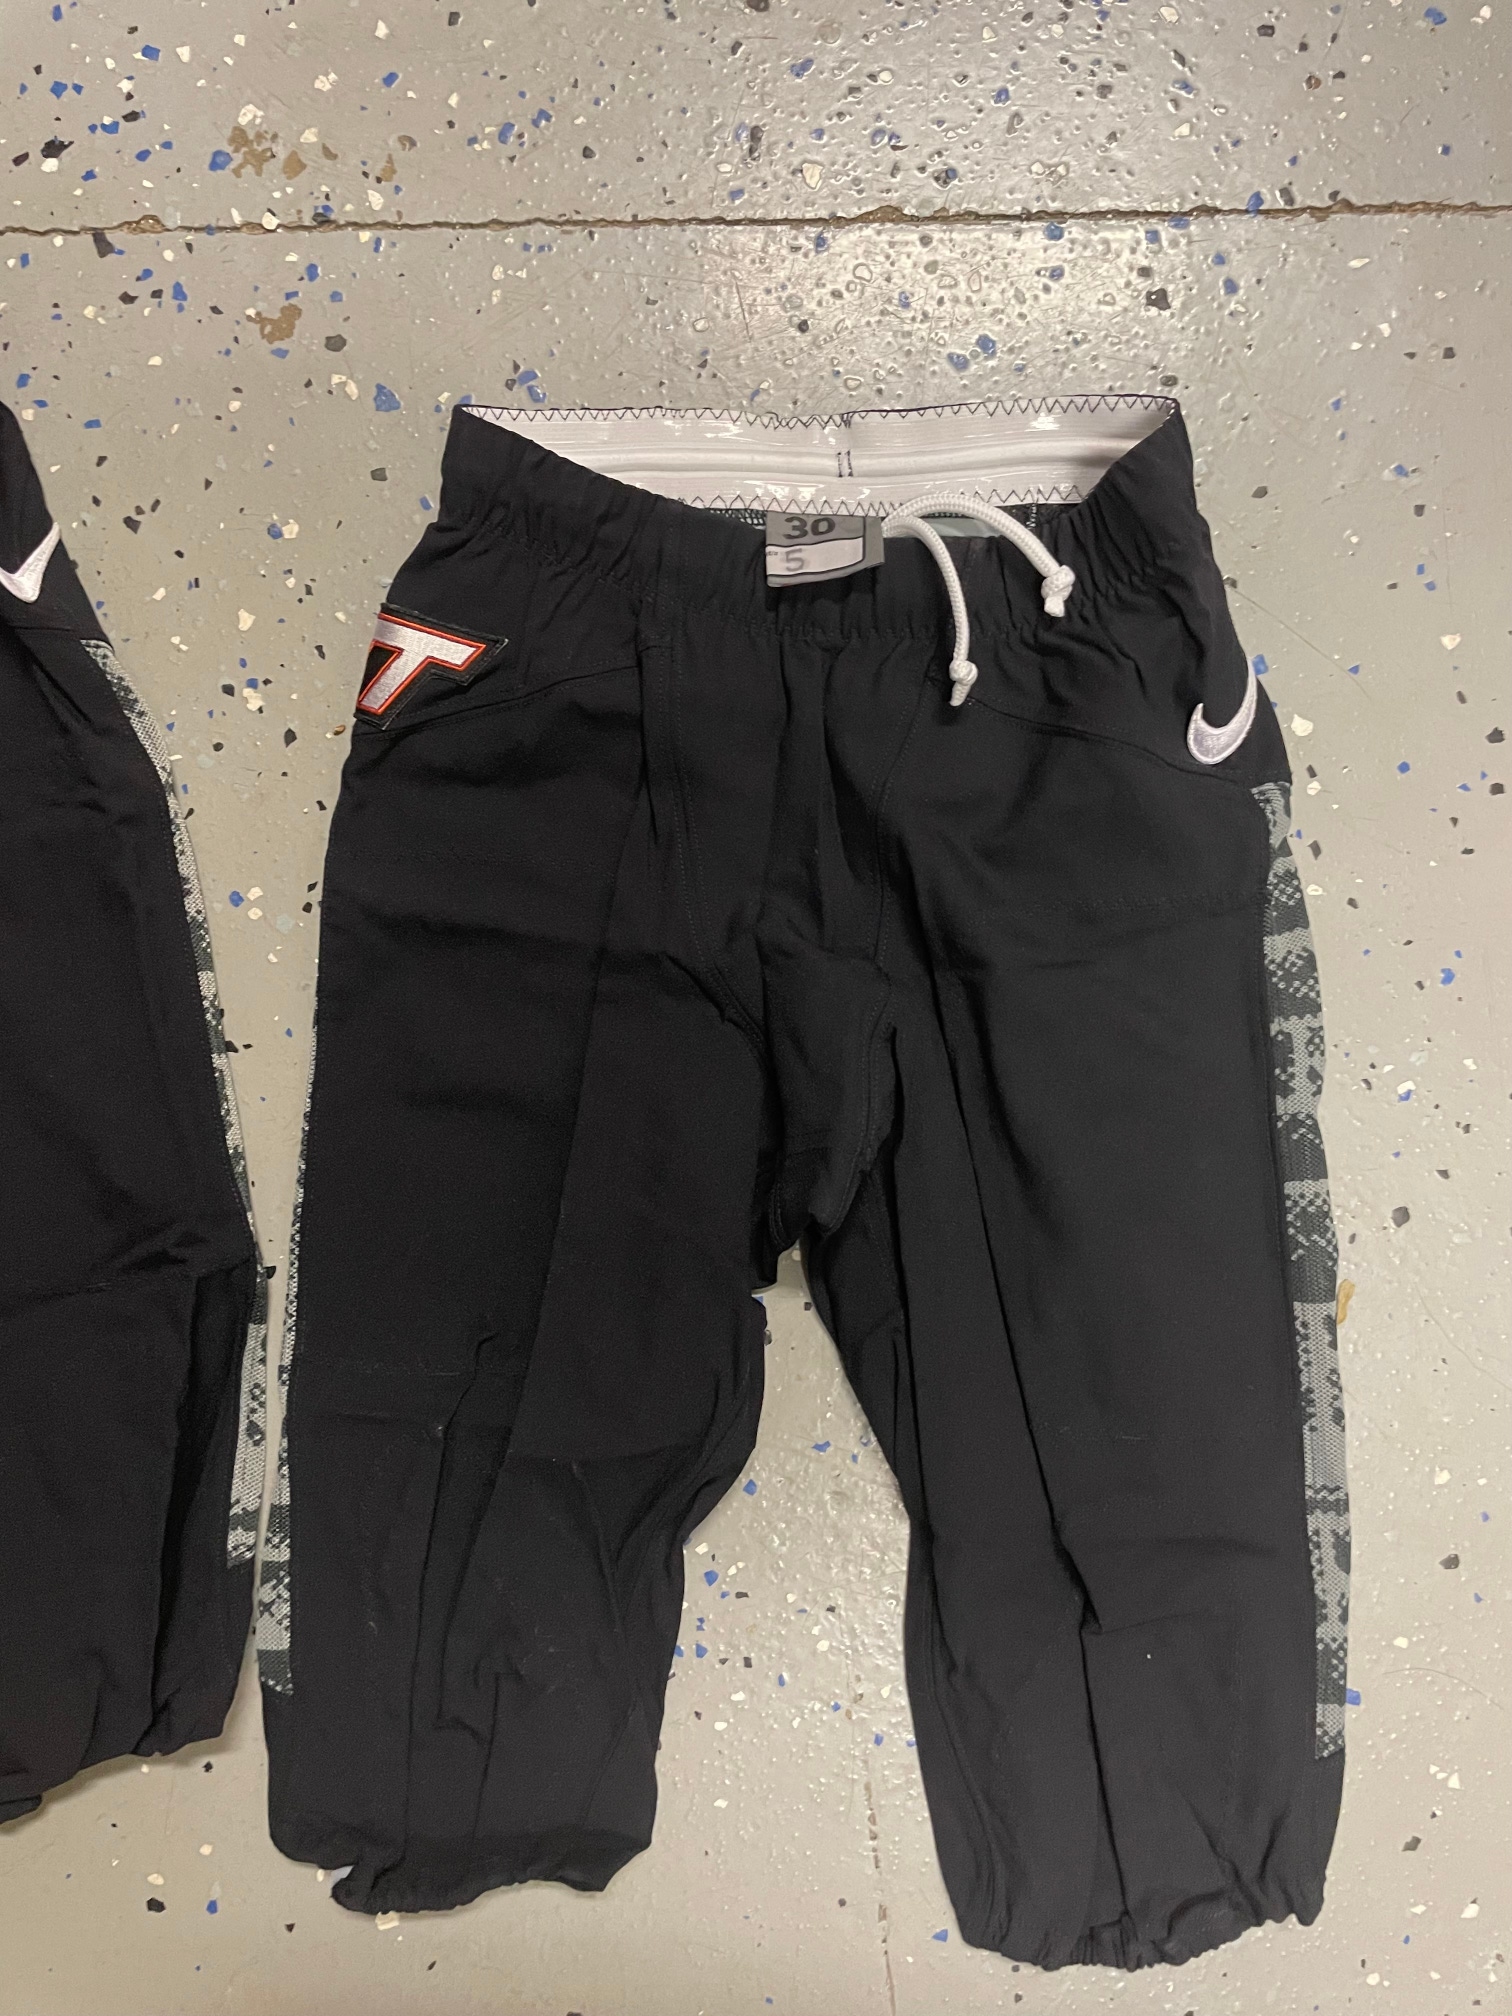 Black Adult Men's Used Size 30 Nike Game Pants